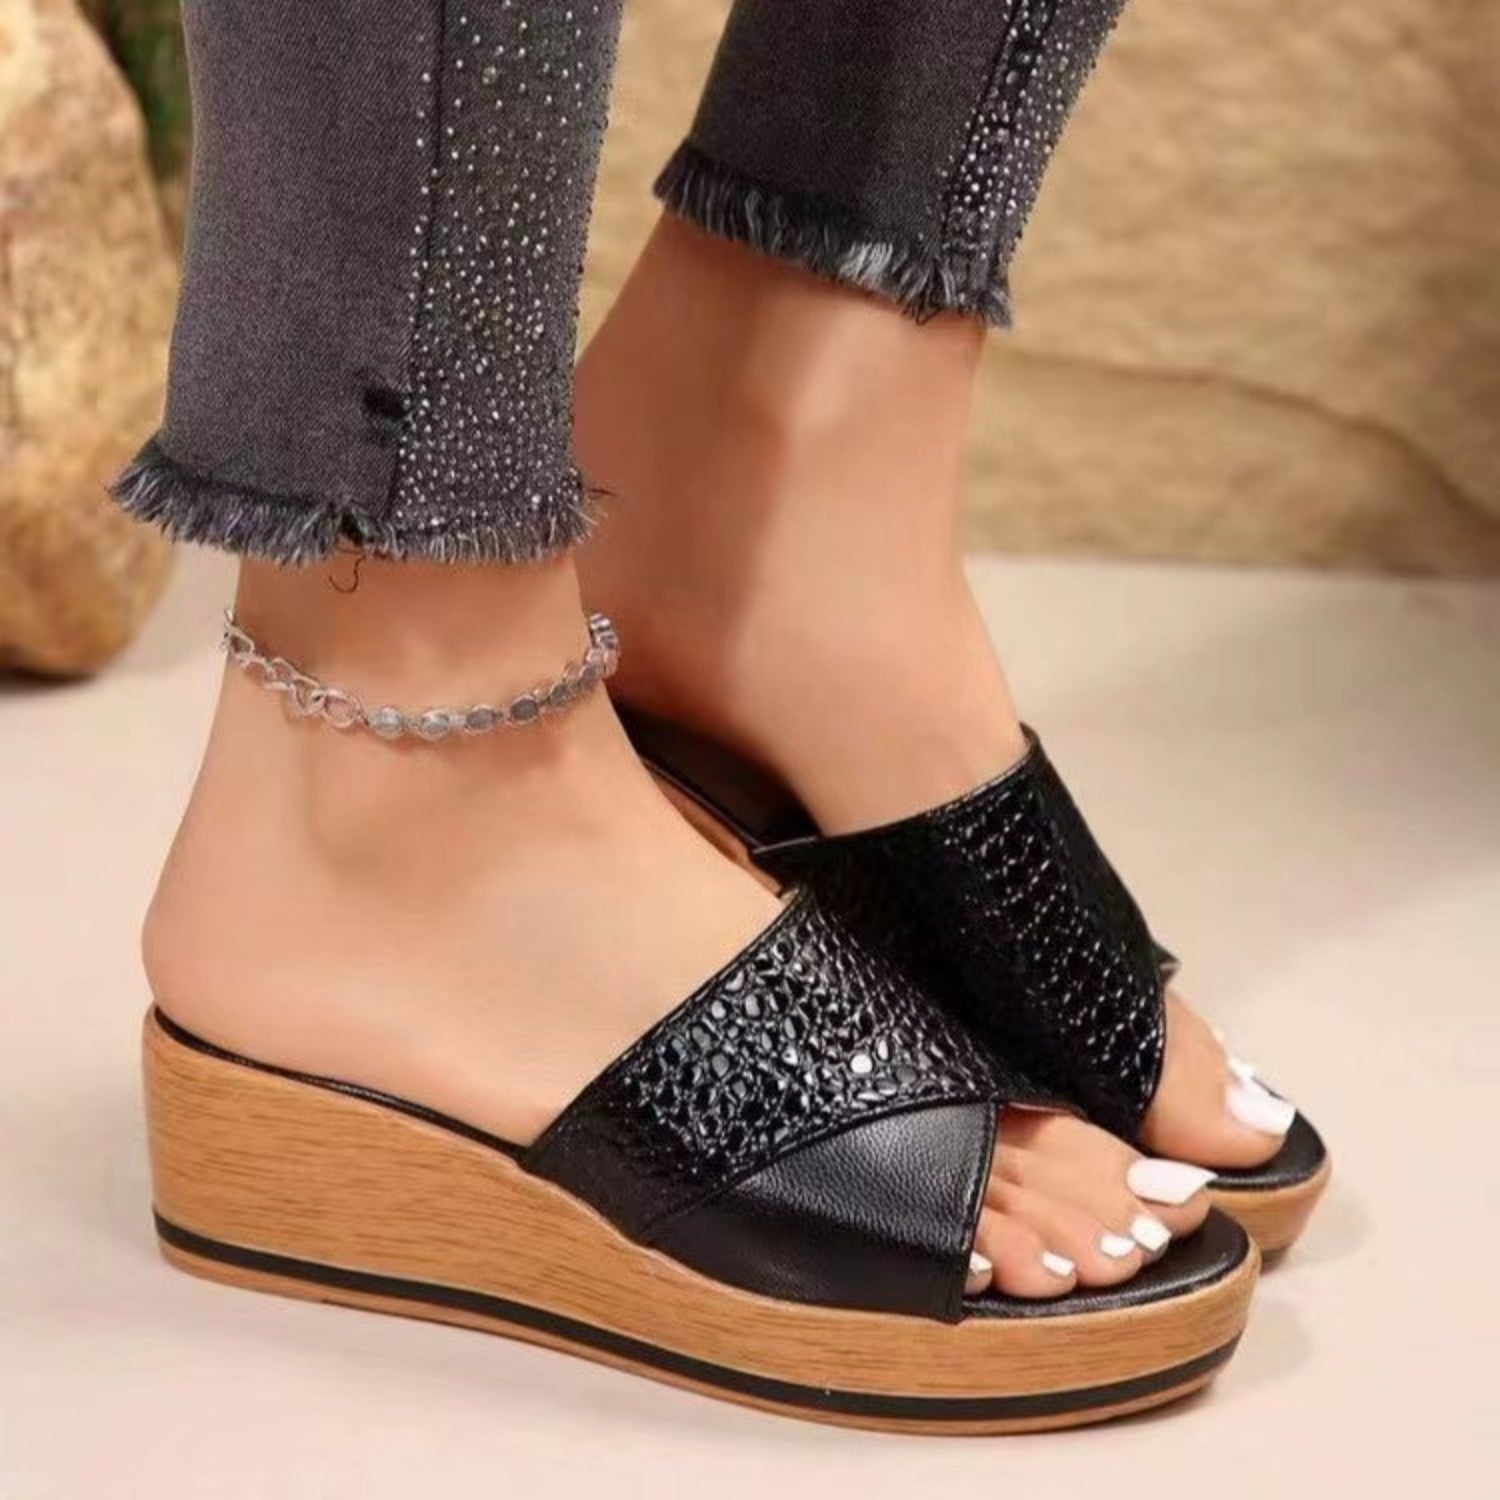 TEEK - PU Leather Open Toe Sandals SHOES TEEK Trend   